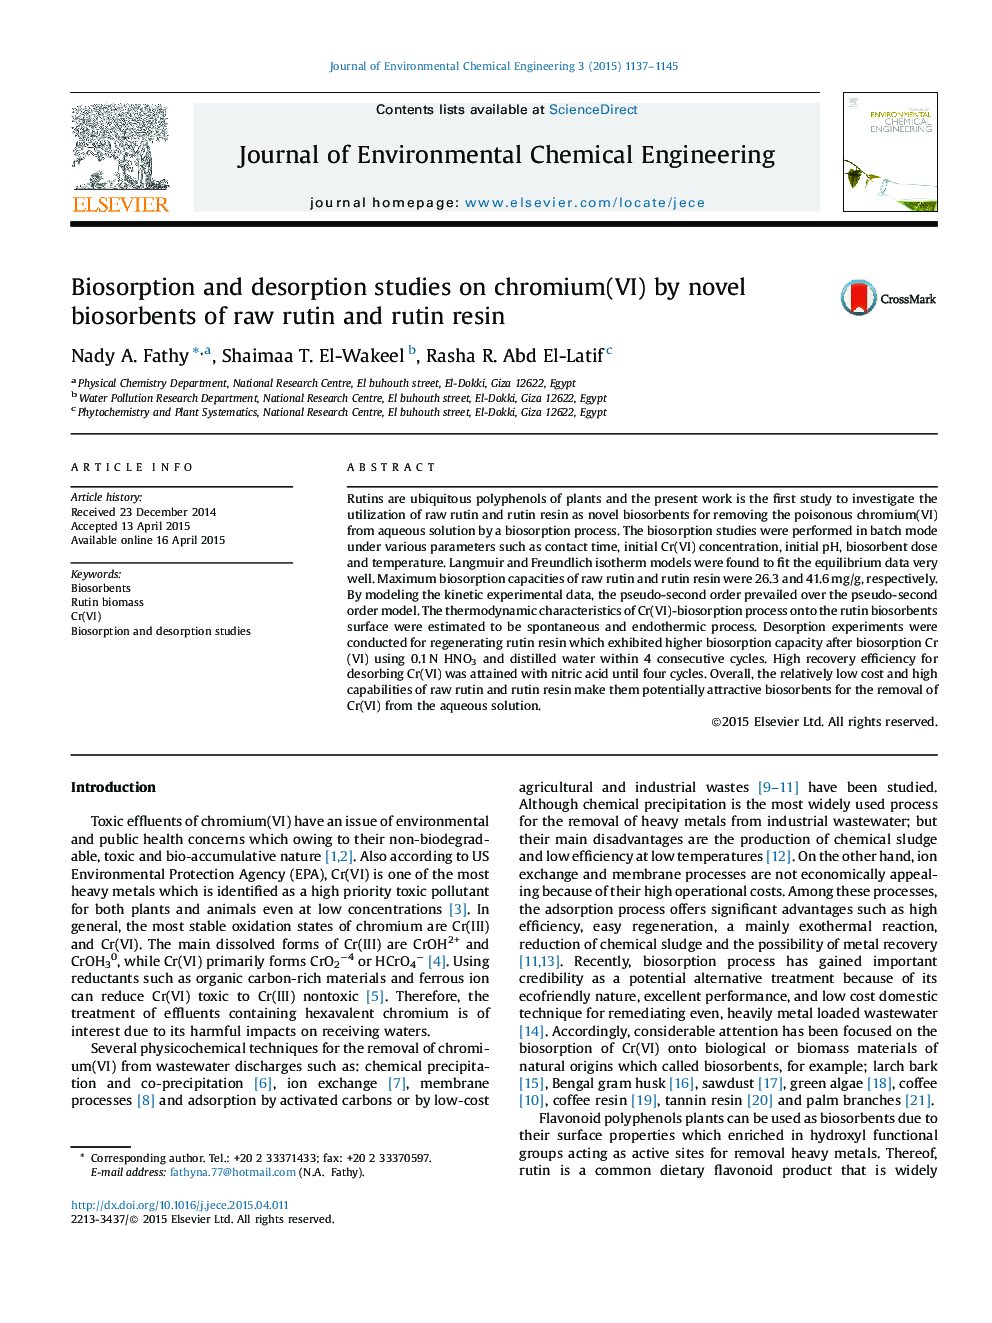 Biosorption and desorption studies on chromium(VI) by novel biosorbents of raw rutin and rutin resin